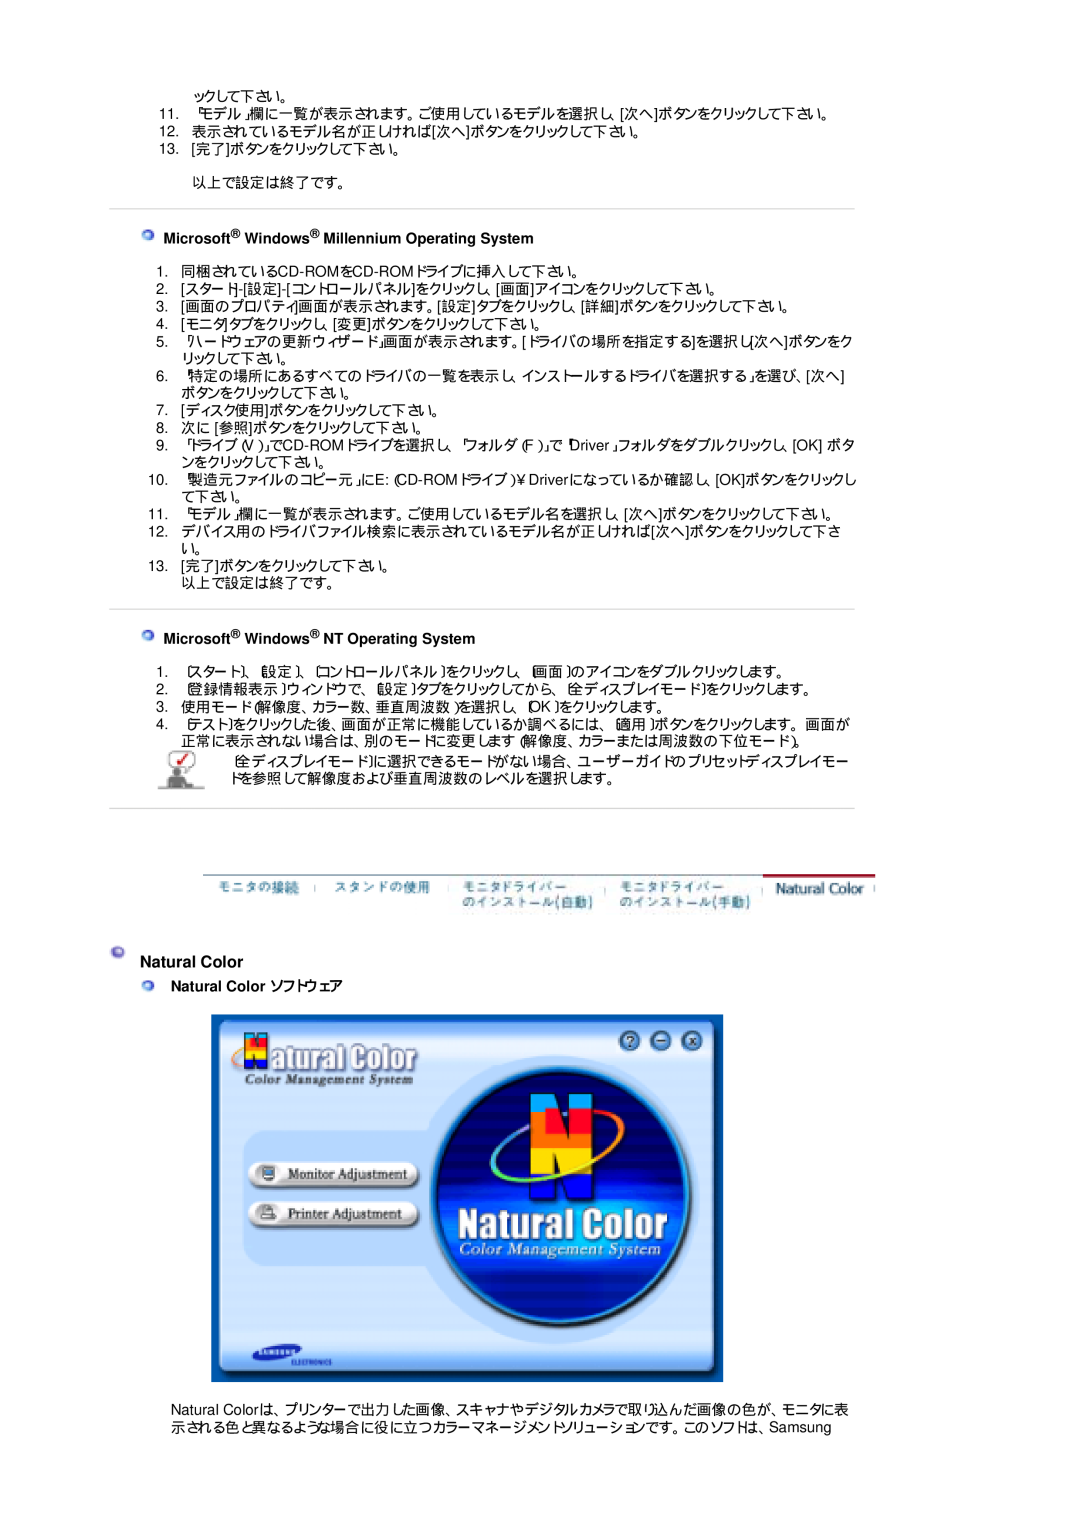 Samsung LS19CIBQS1/XSJ Natural Color, Microsoft Windows Millennium Operating System, Microsoft Windows NT Operating System 